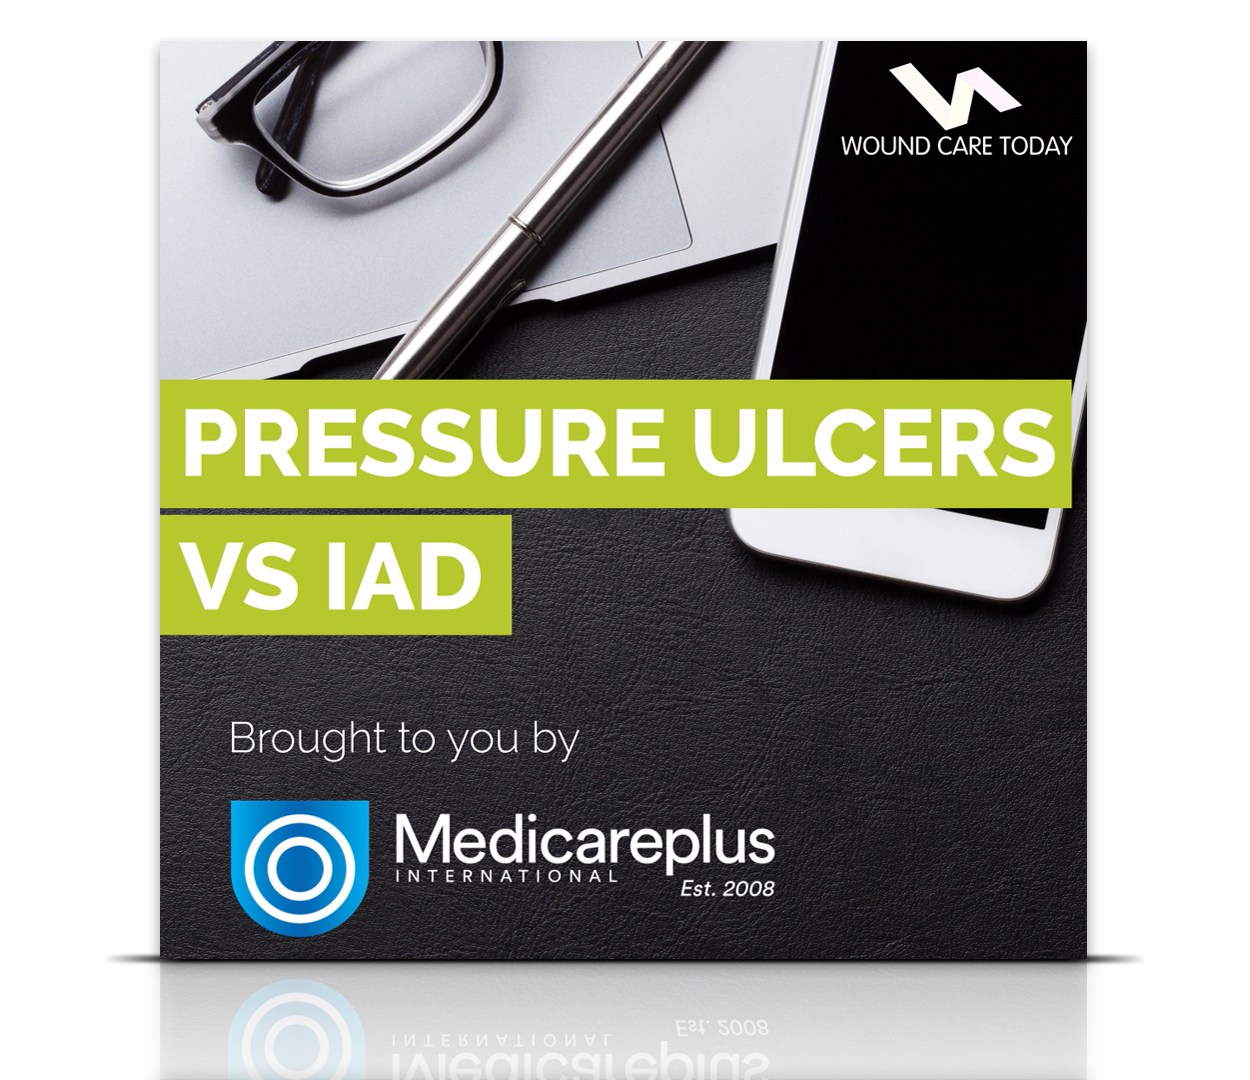 Pressure ulcers vs IAD